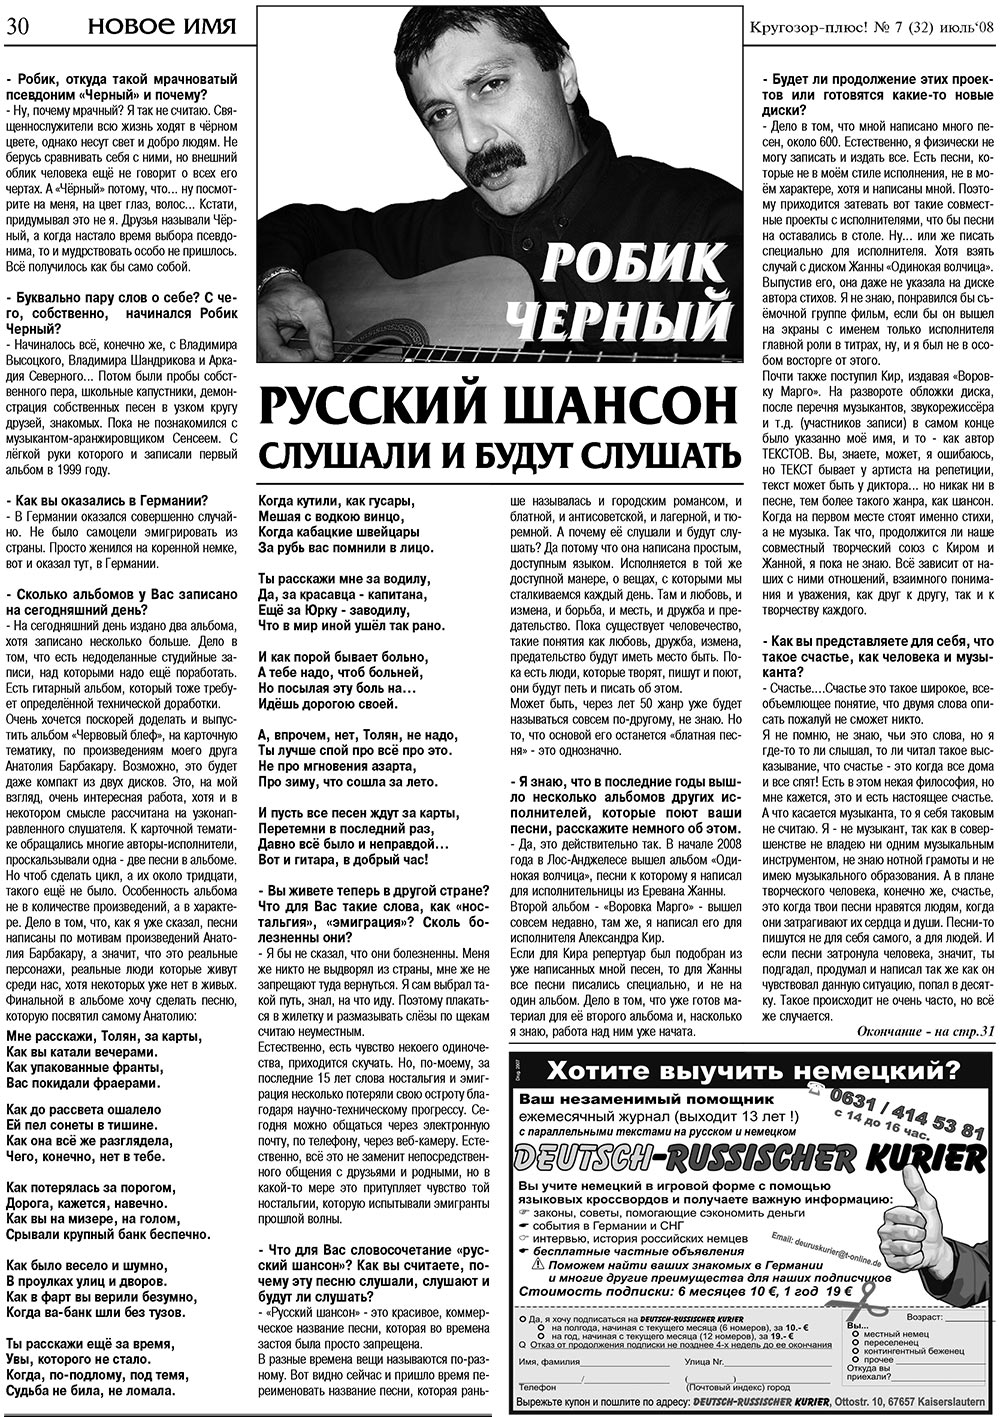 Кругозор плюс! (газета). 2008 год, номер 7, стр. 30